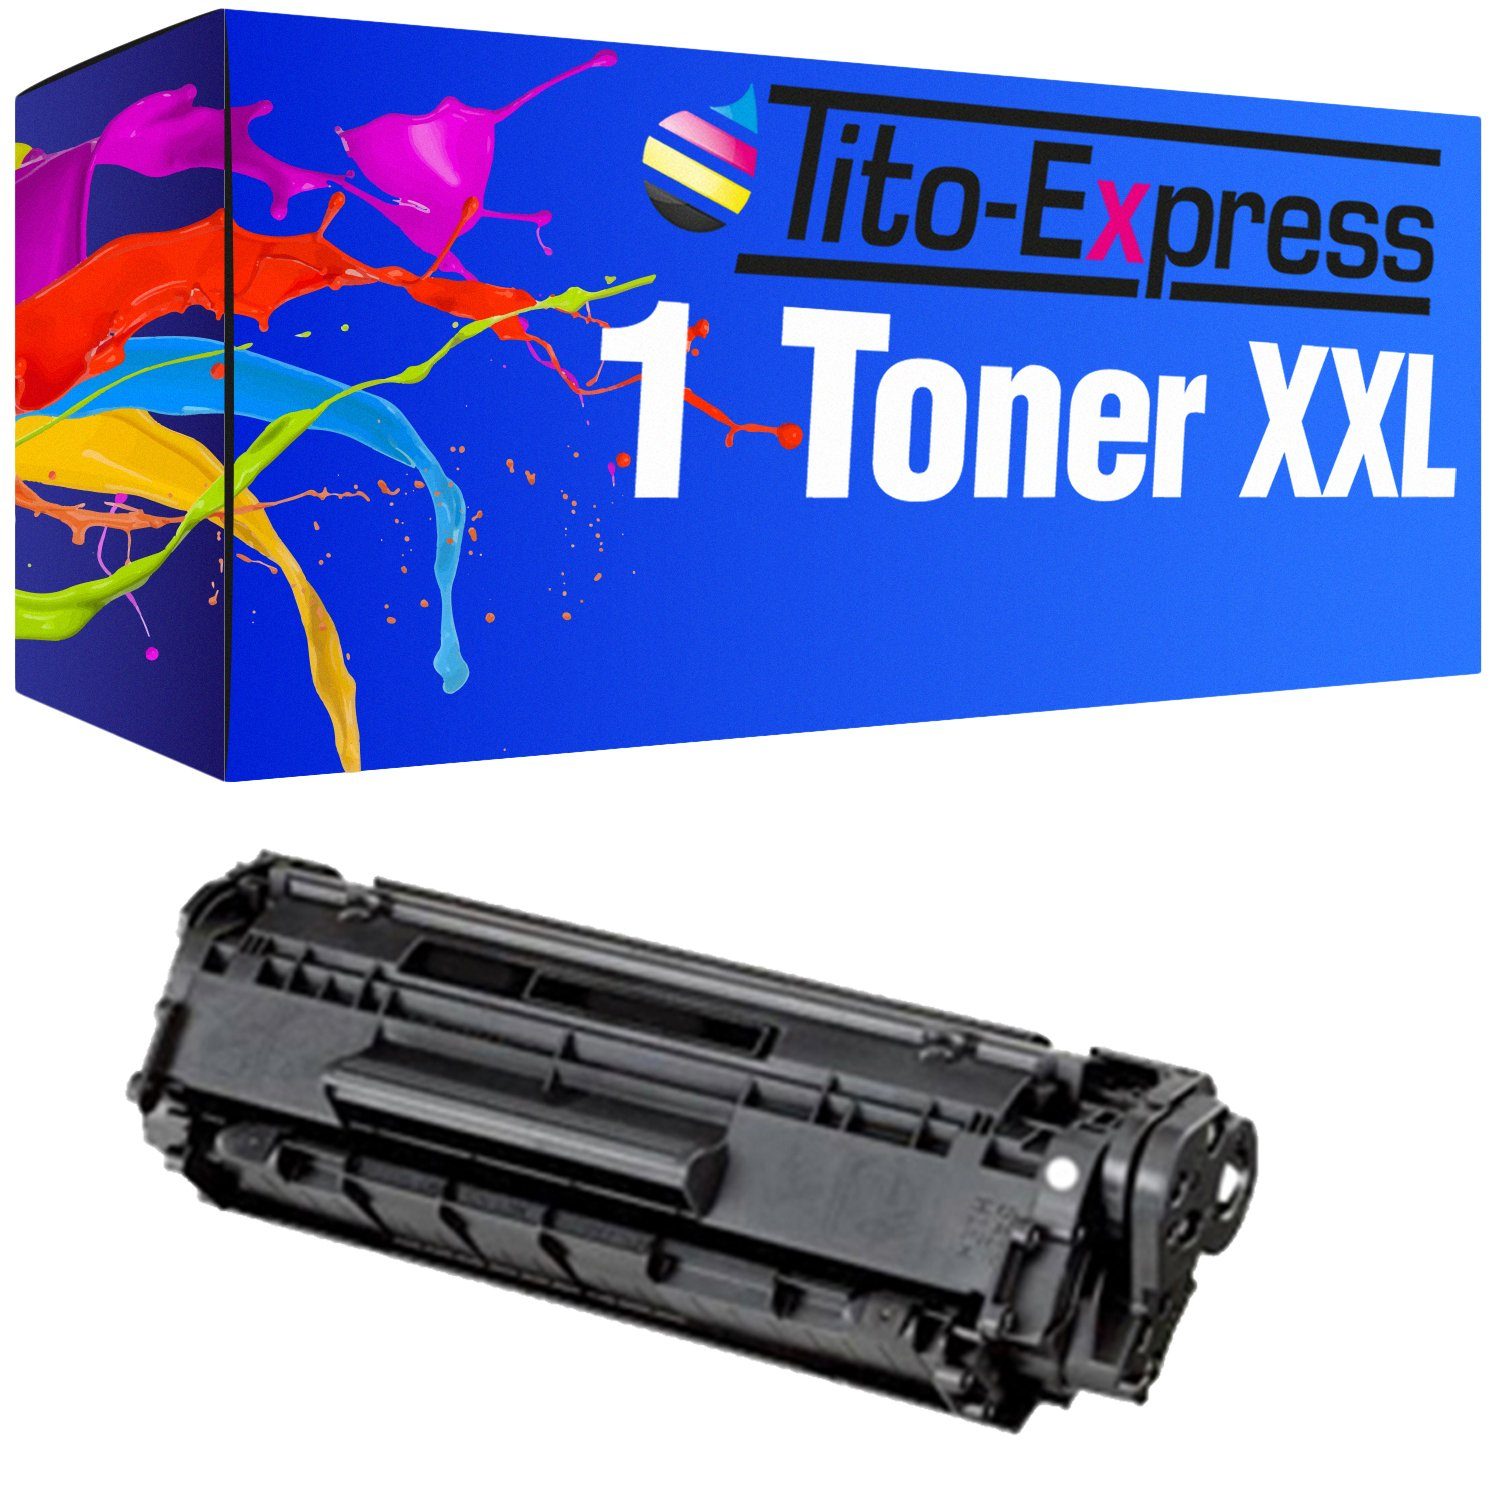 (1x PC-D440 ersetzt MF4350D MF4010 Tonerpatrone MF4120 FX 10 MF4340D Canon MF4150 MF4320D CanonFX10, Black), I-Sensys Tito-Express Canon für FX-10